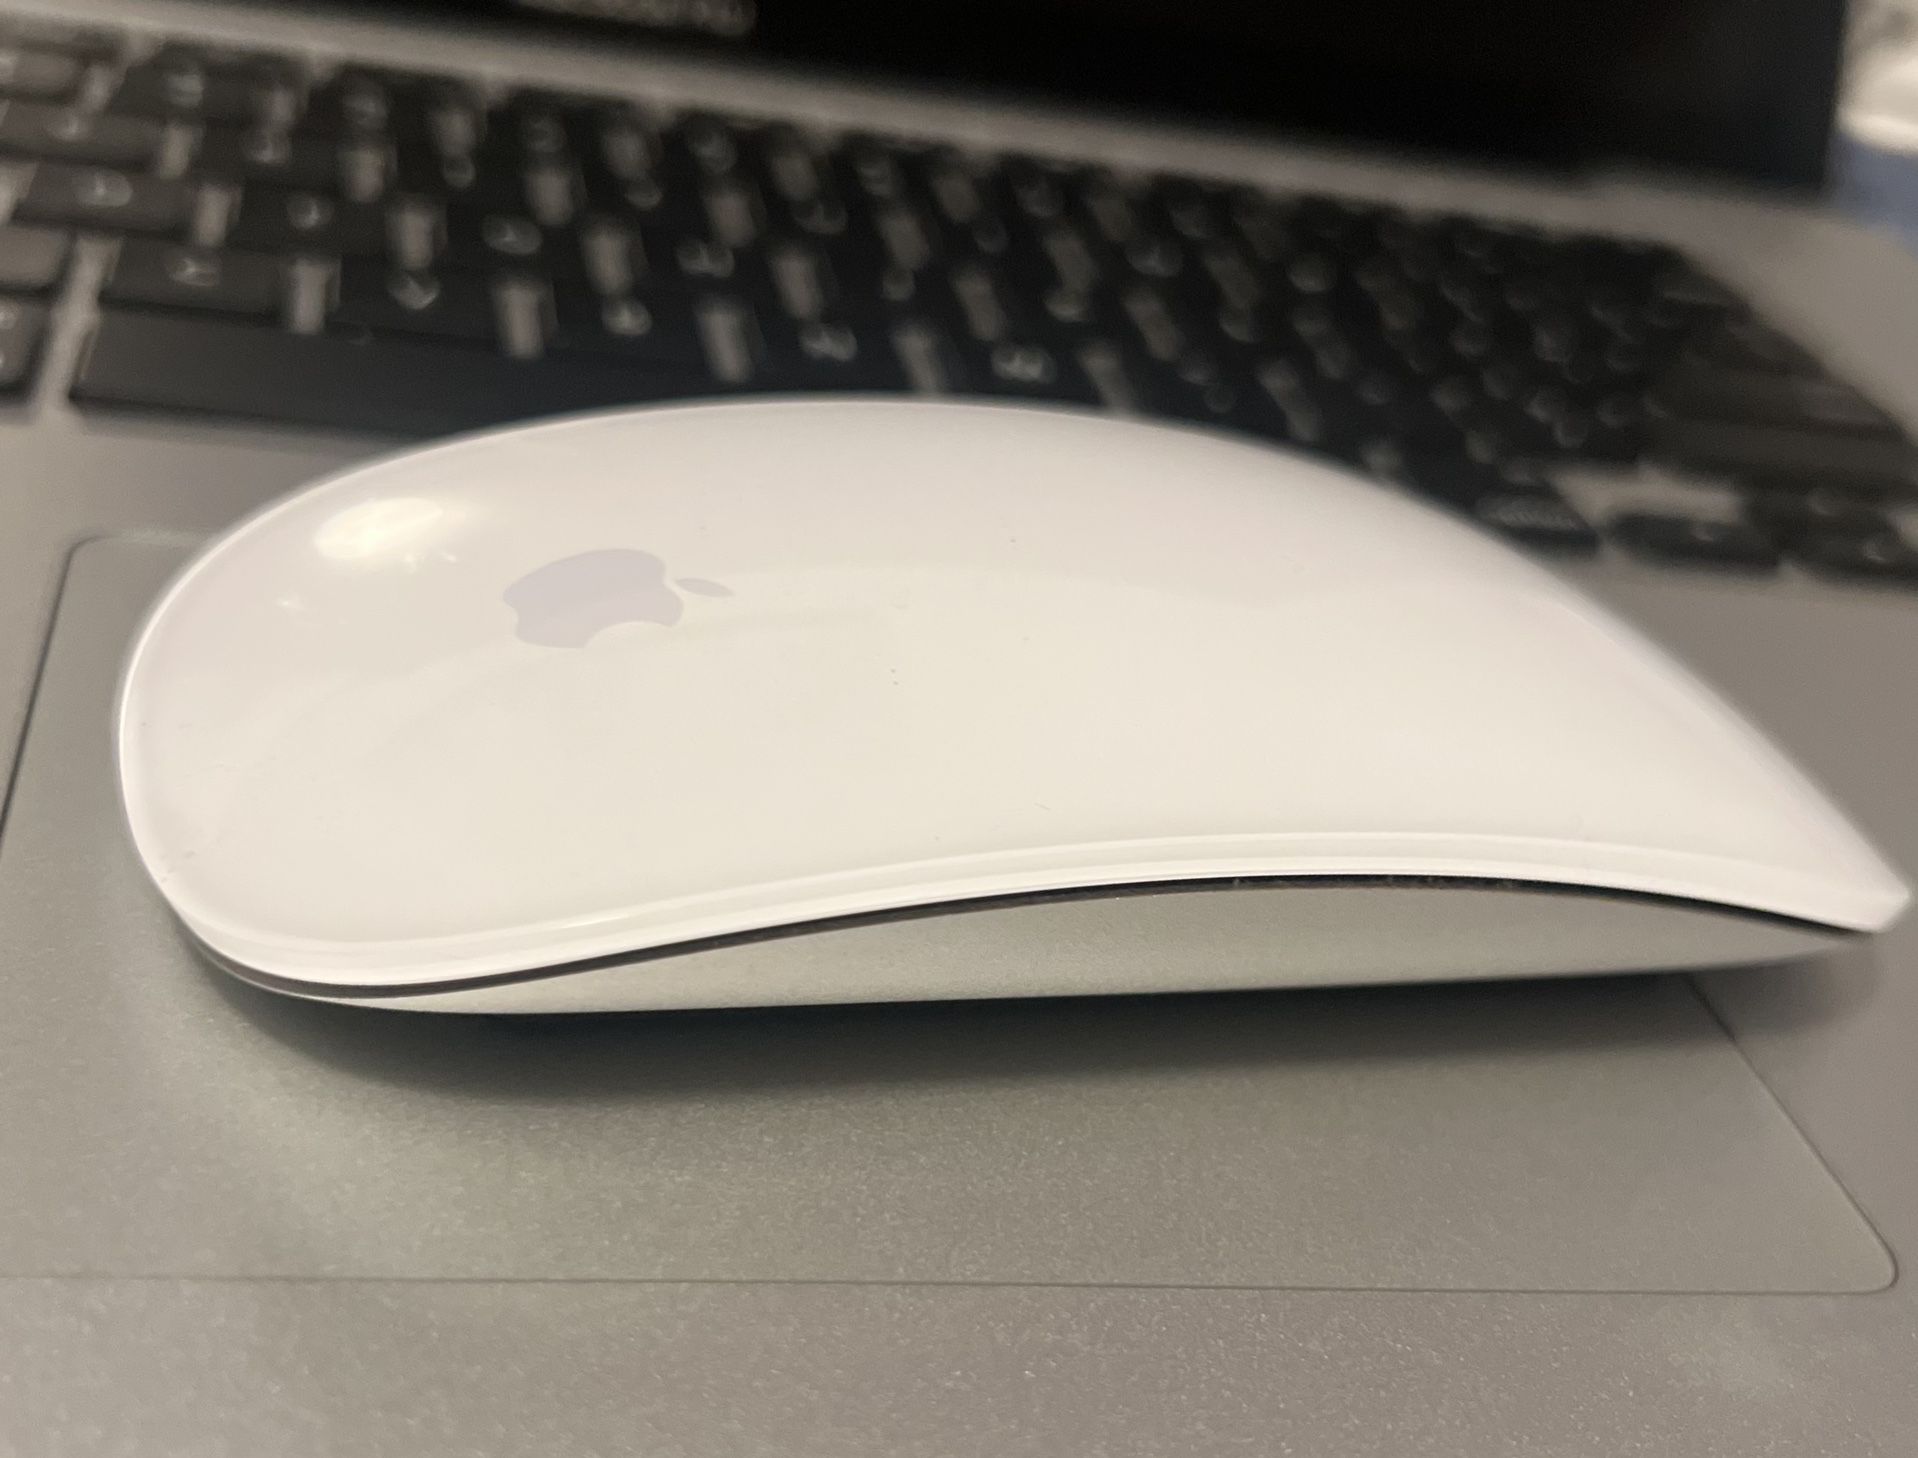 Apple Magic Mouse (First Gen)